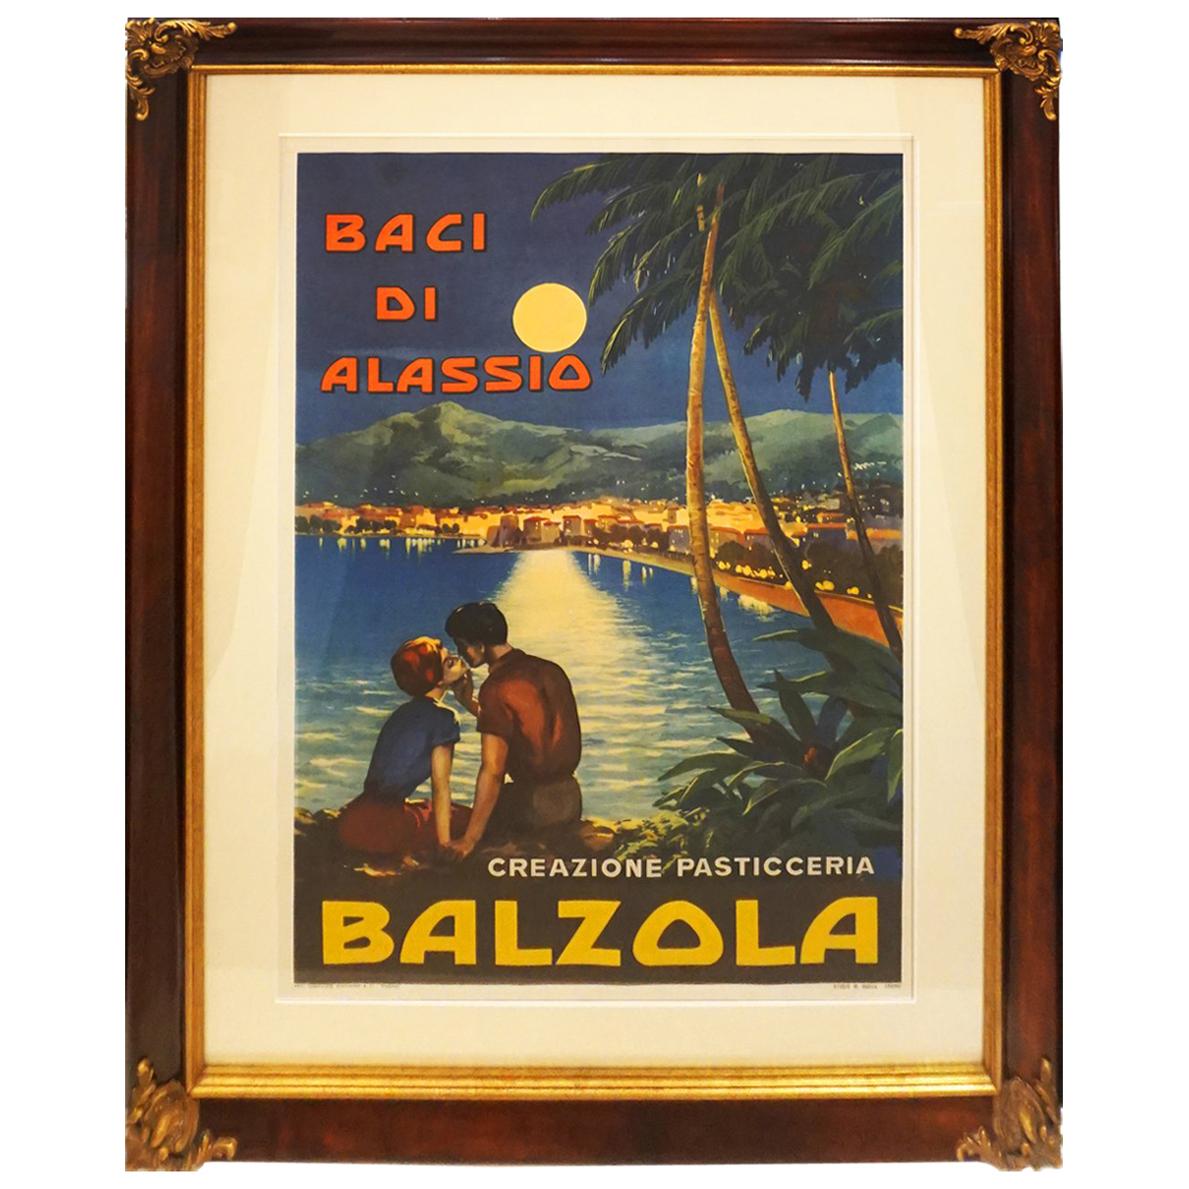 Italian Vintage Pastry Shop Poster for ‘Balzola Baci Di Alassio’, 1955 For Sale